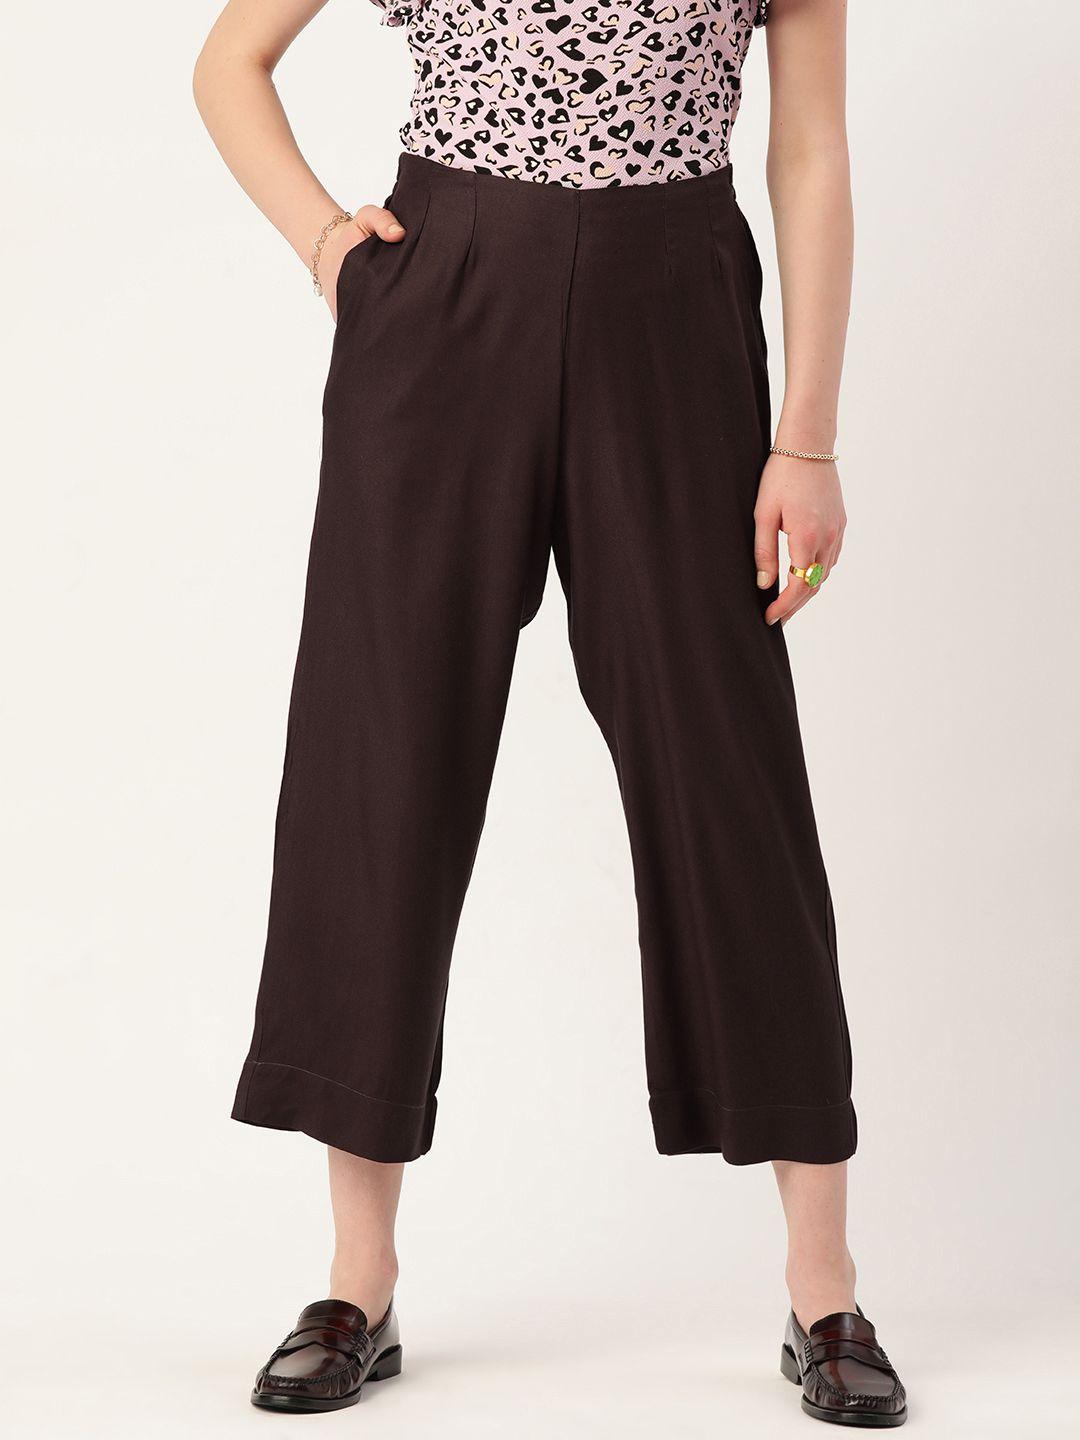 dressberry women culottes trousers